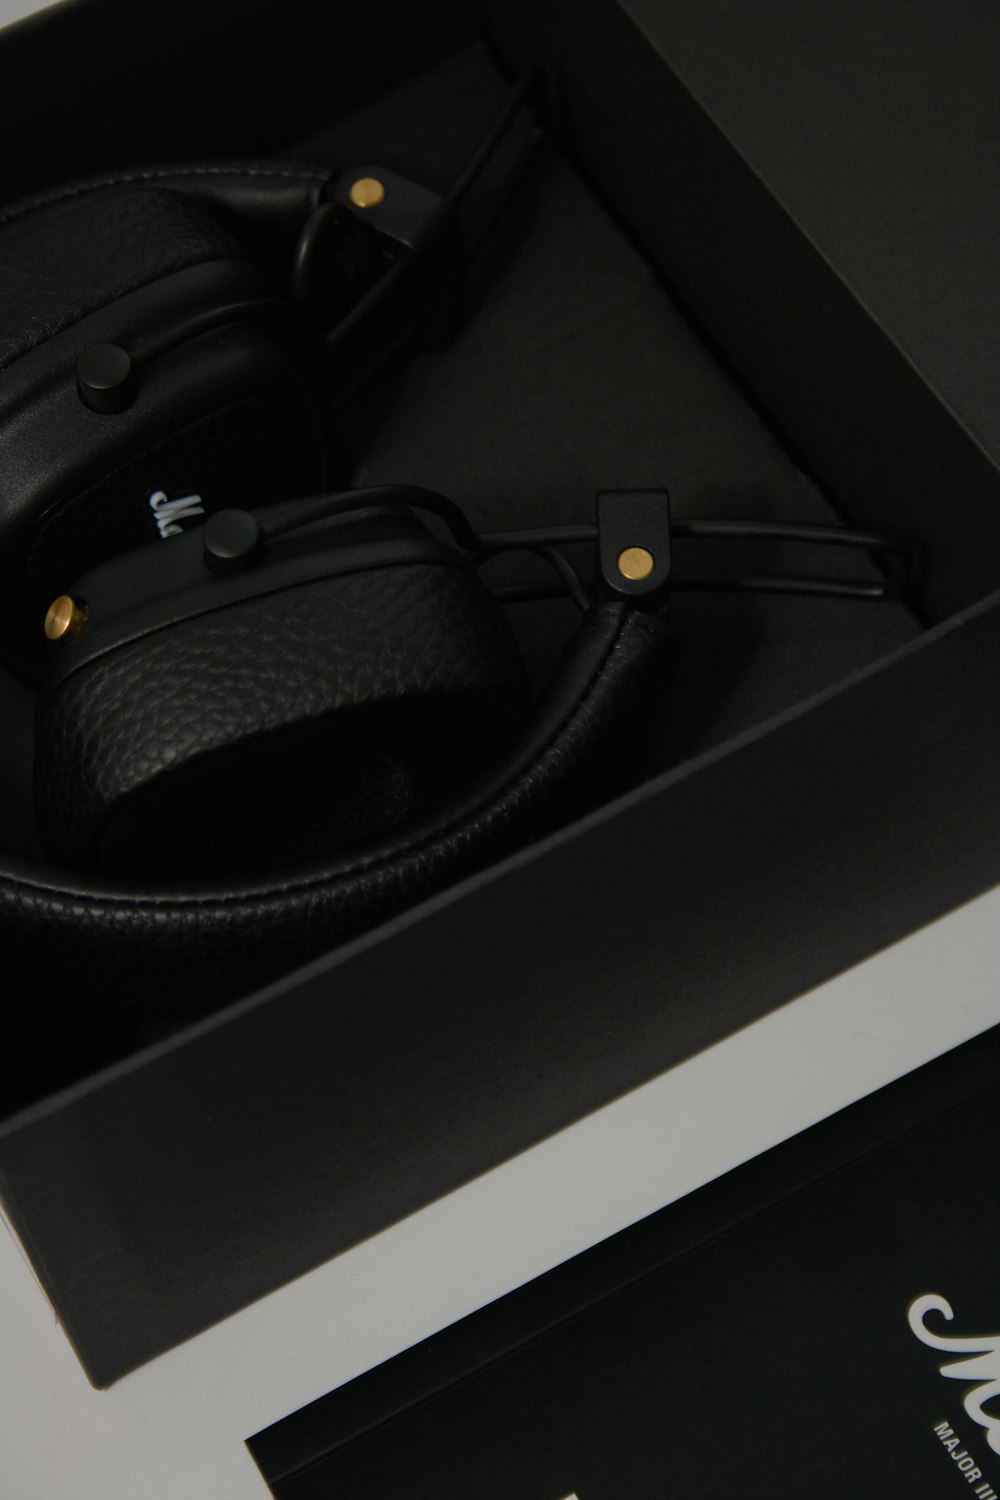 black corded headphones on black box